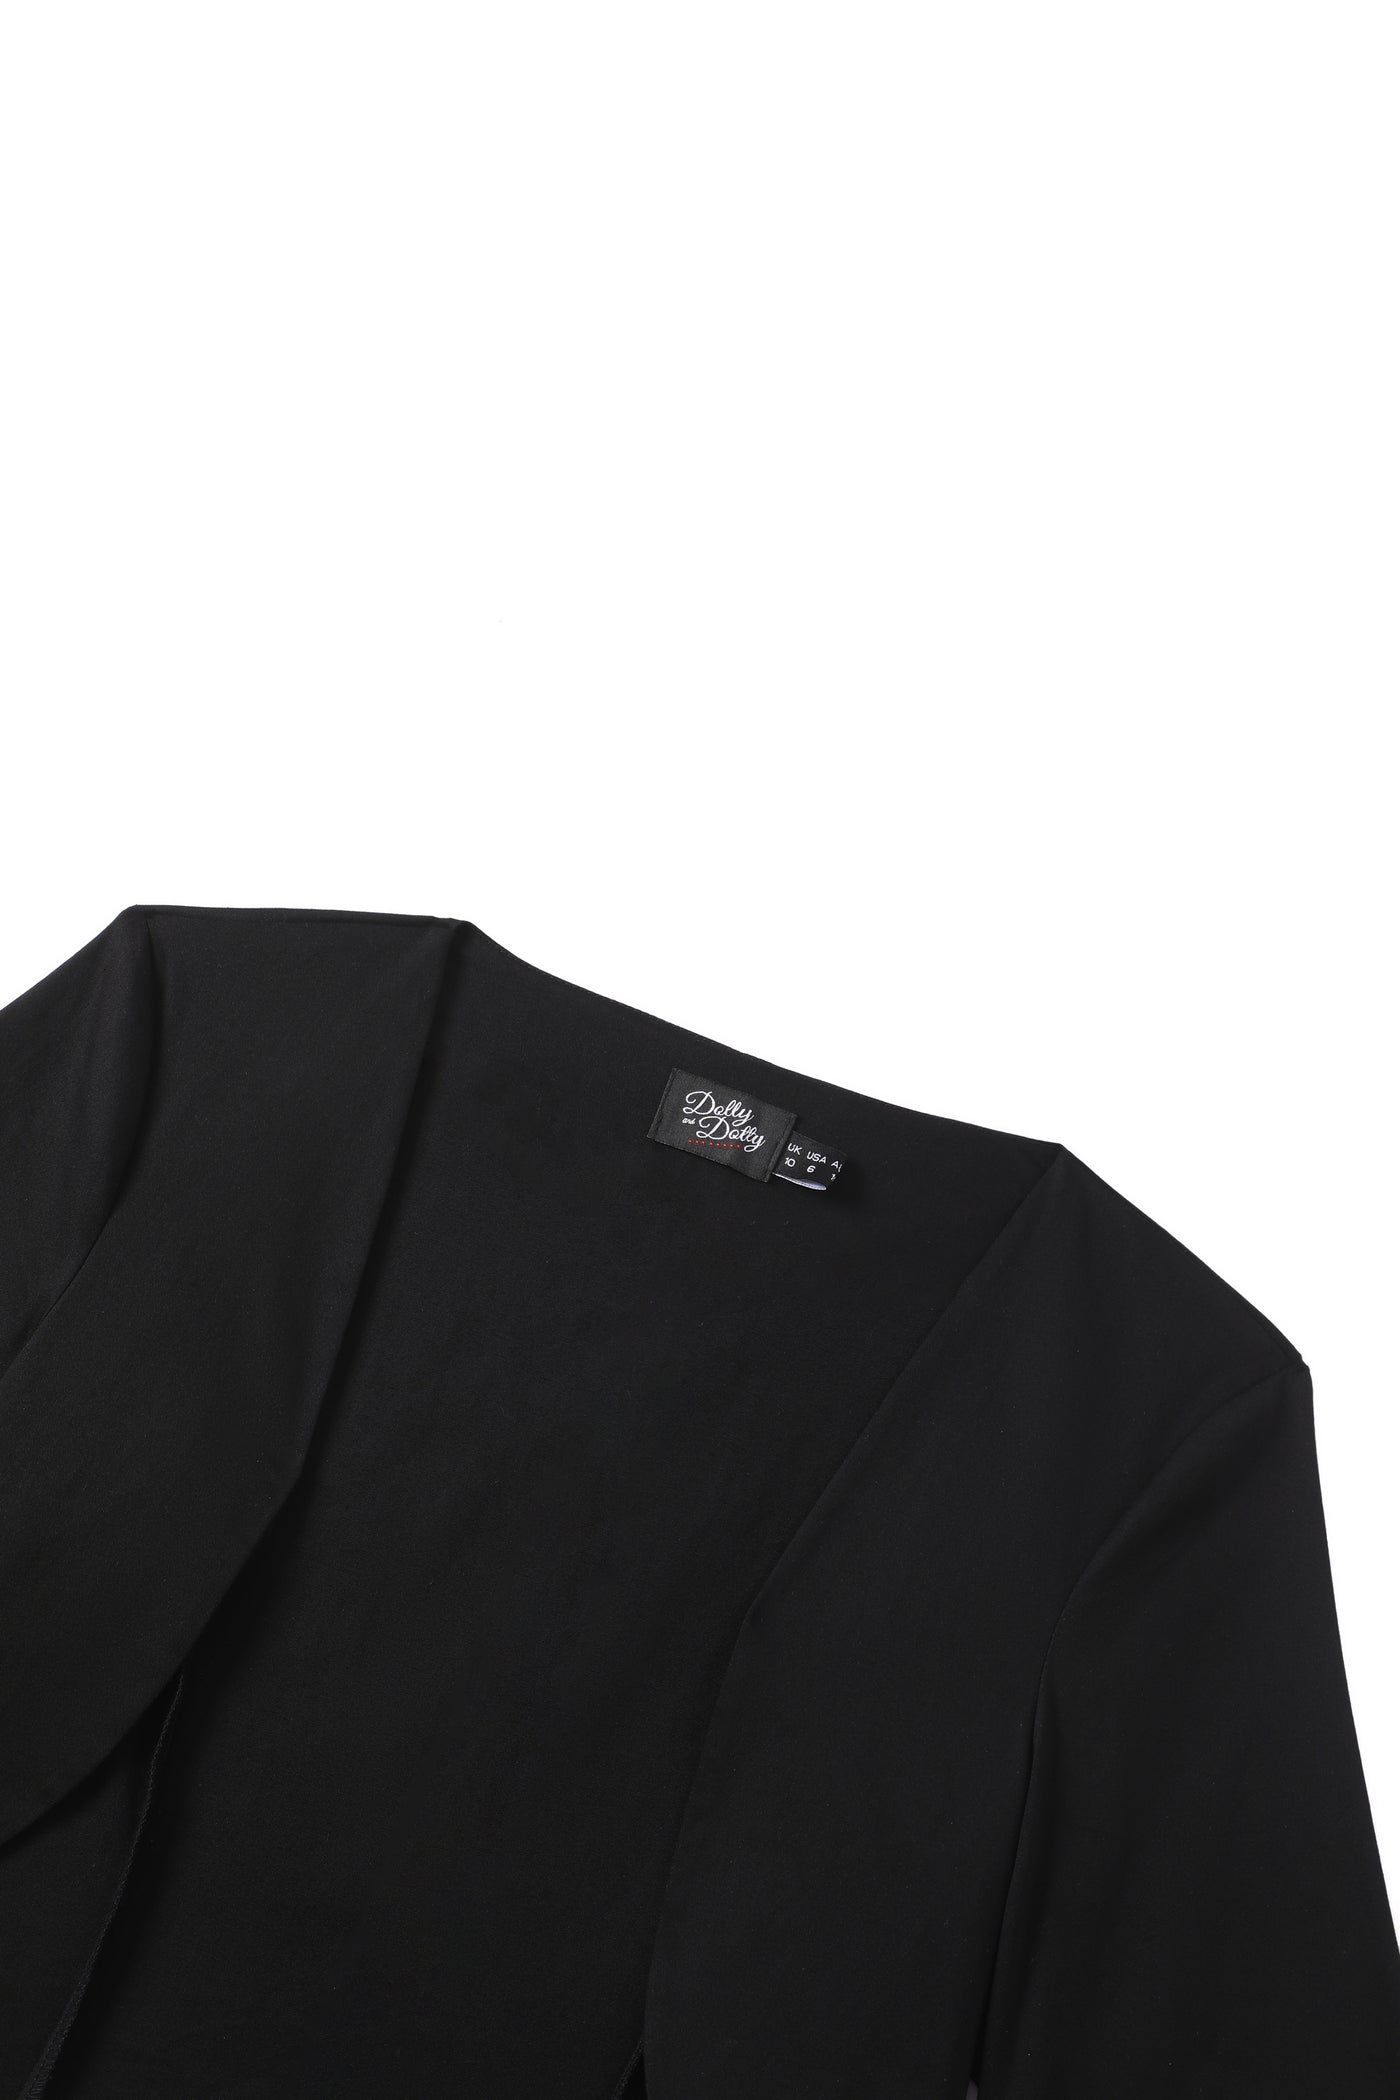 Close up view of Black Bolero Jacket